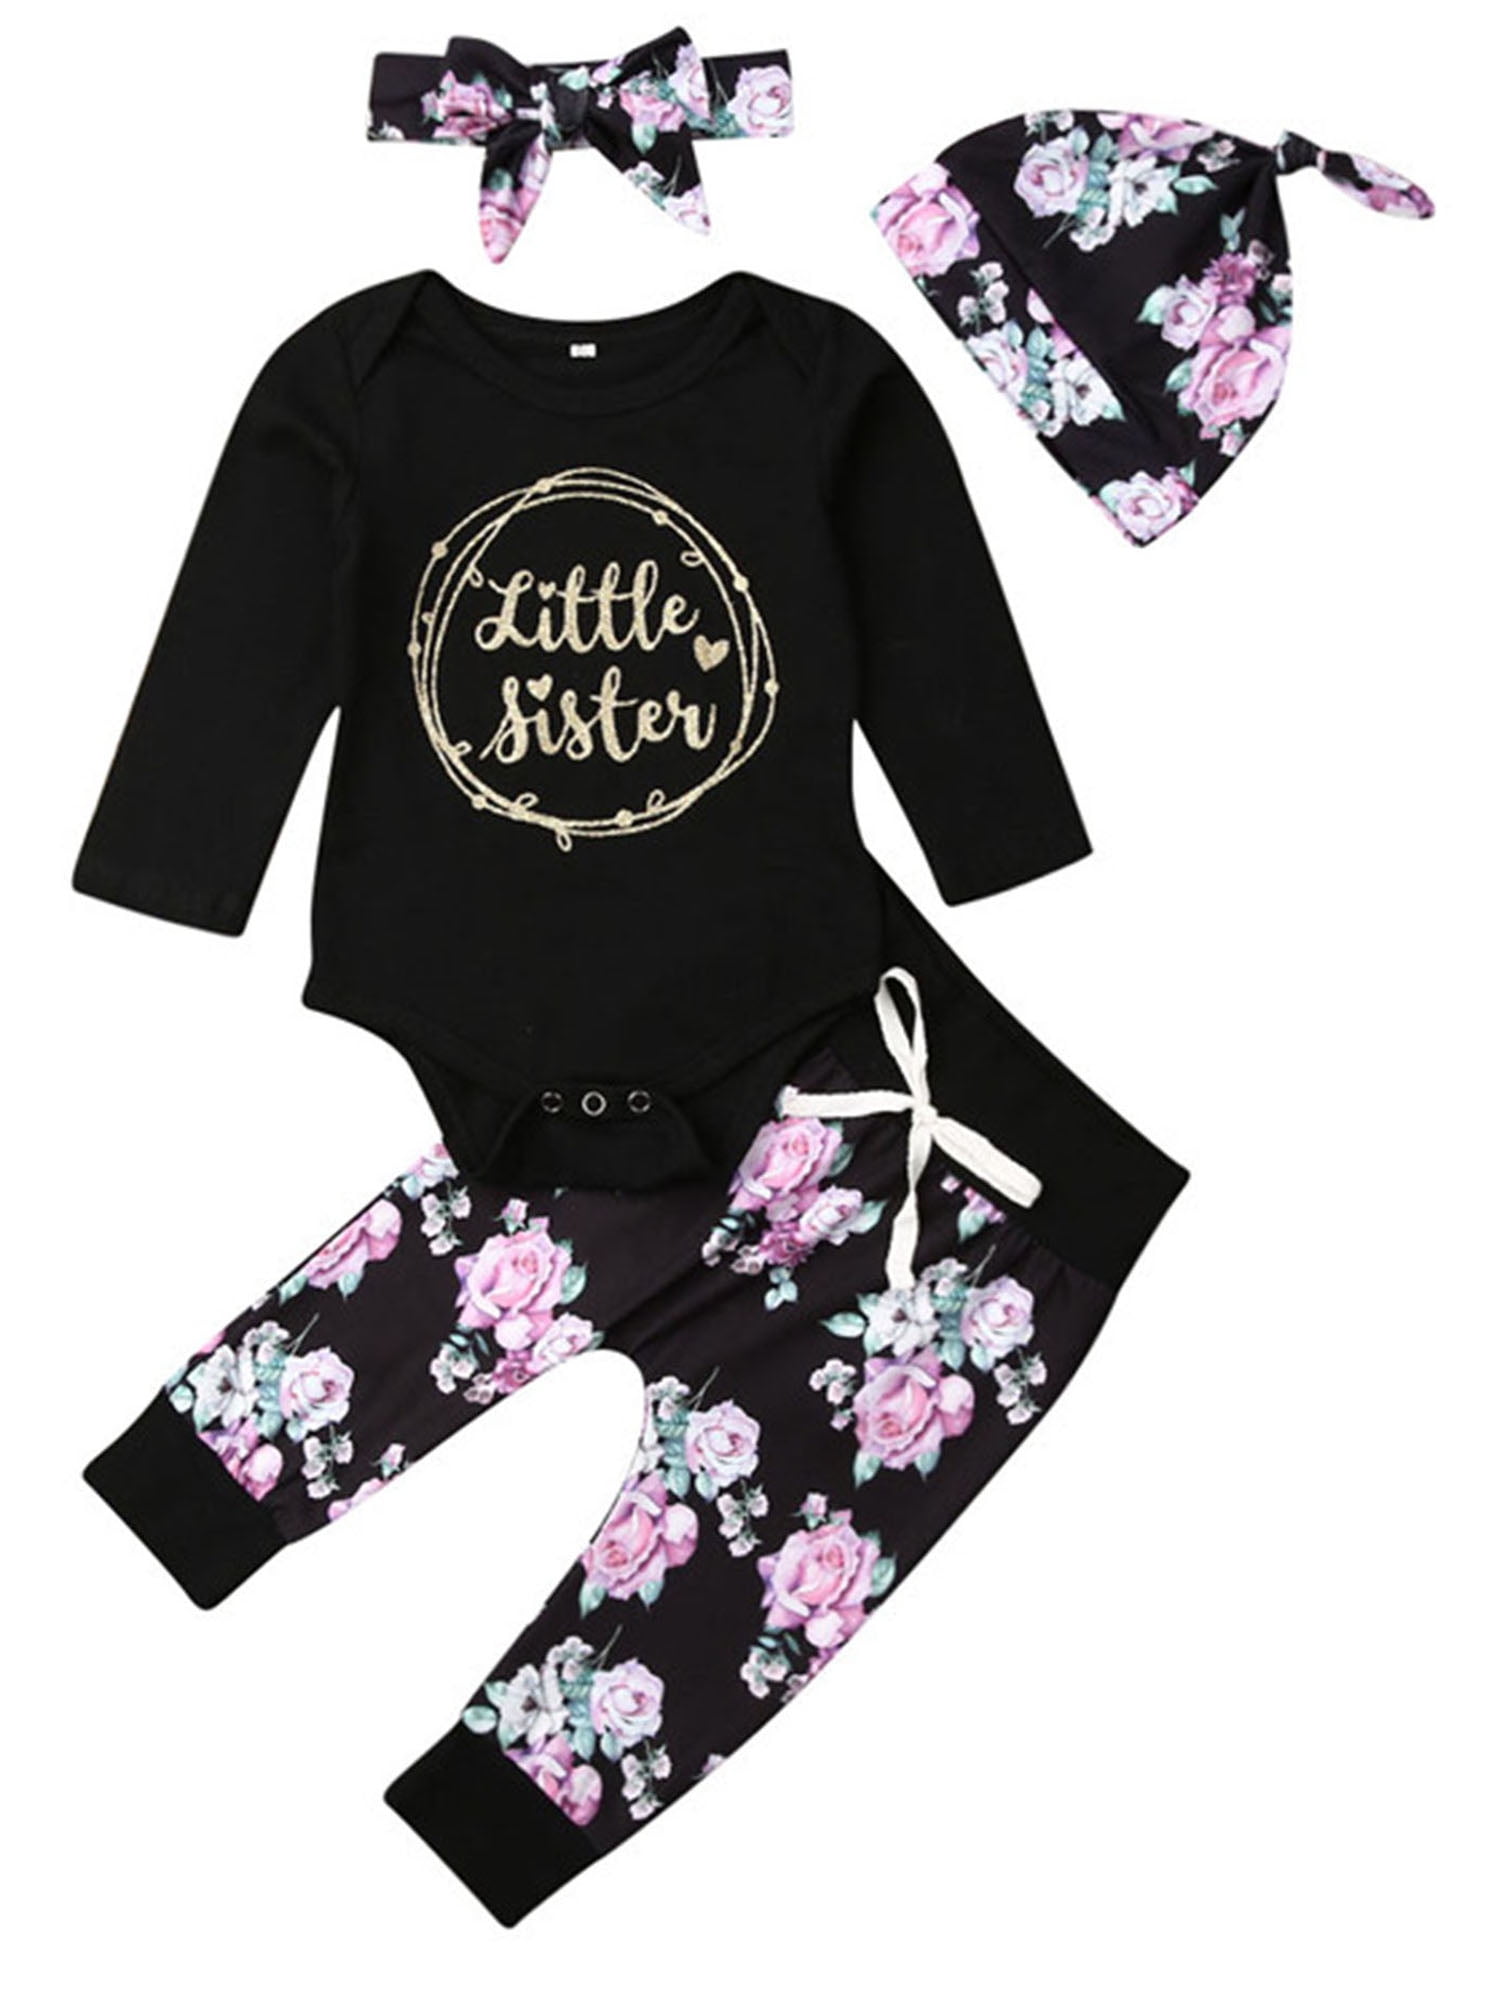 IZhansean Newborn Baby Little Sister Girl Clothes Romper+Pants Leggings Outfit 4pcs Set Black 0-3 Months